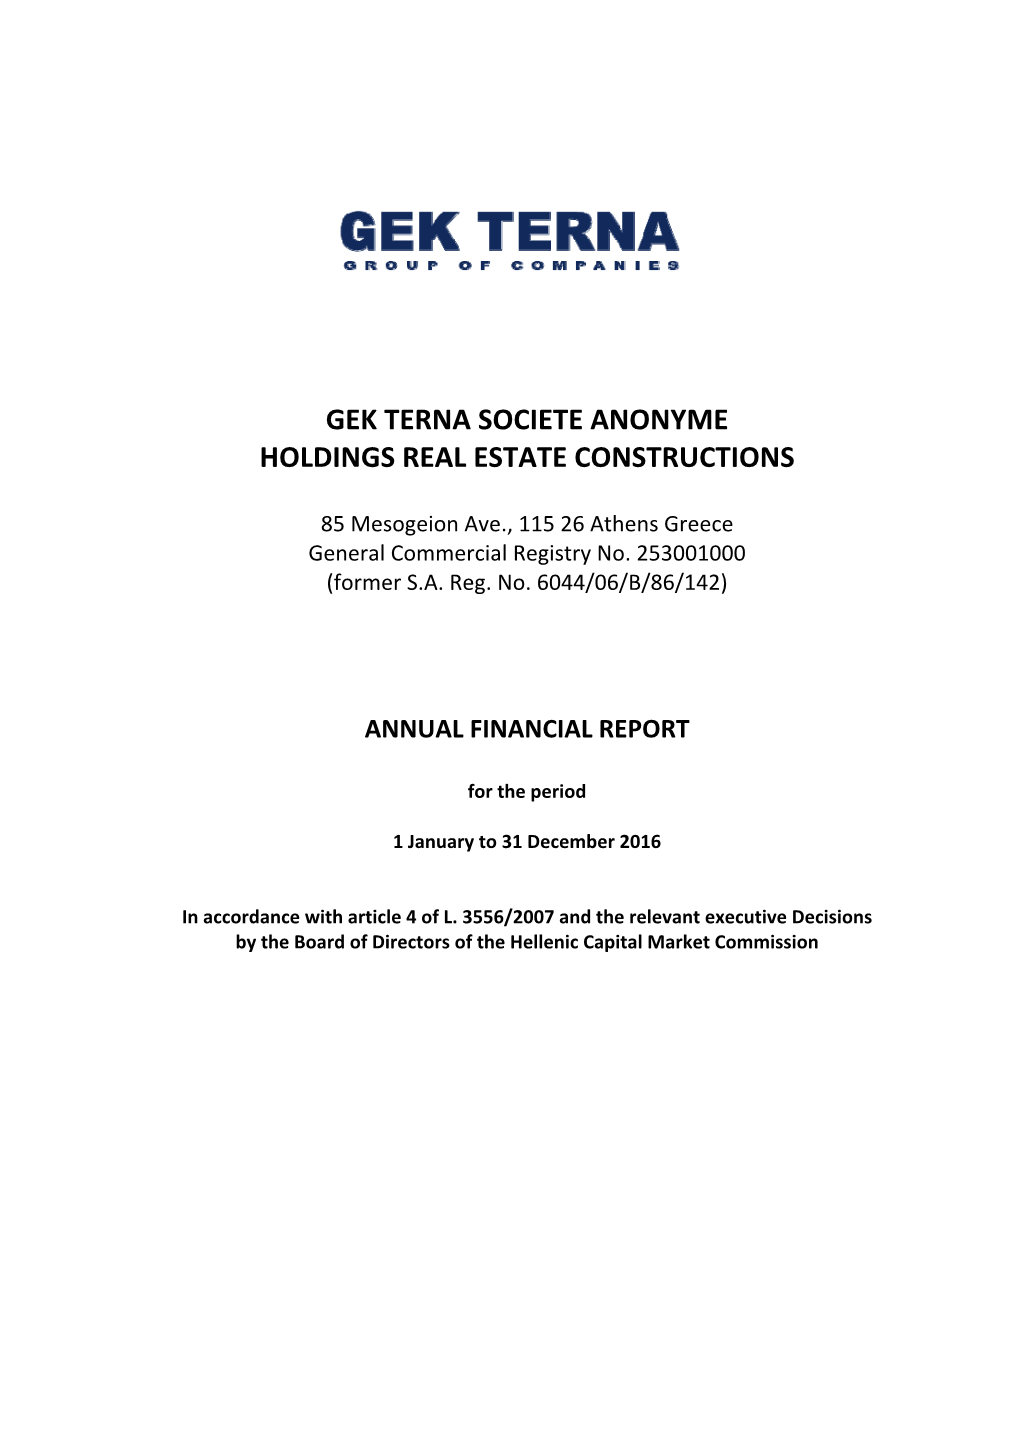 Gek Terna Societe Anonyme Holdings Real Estate Constructions